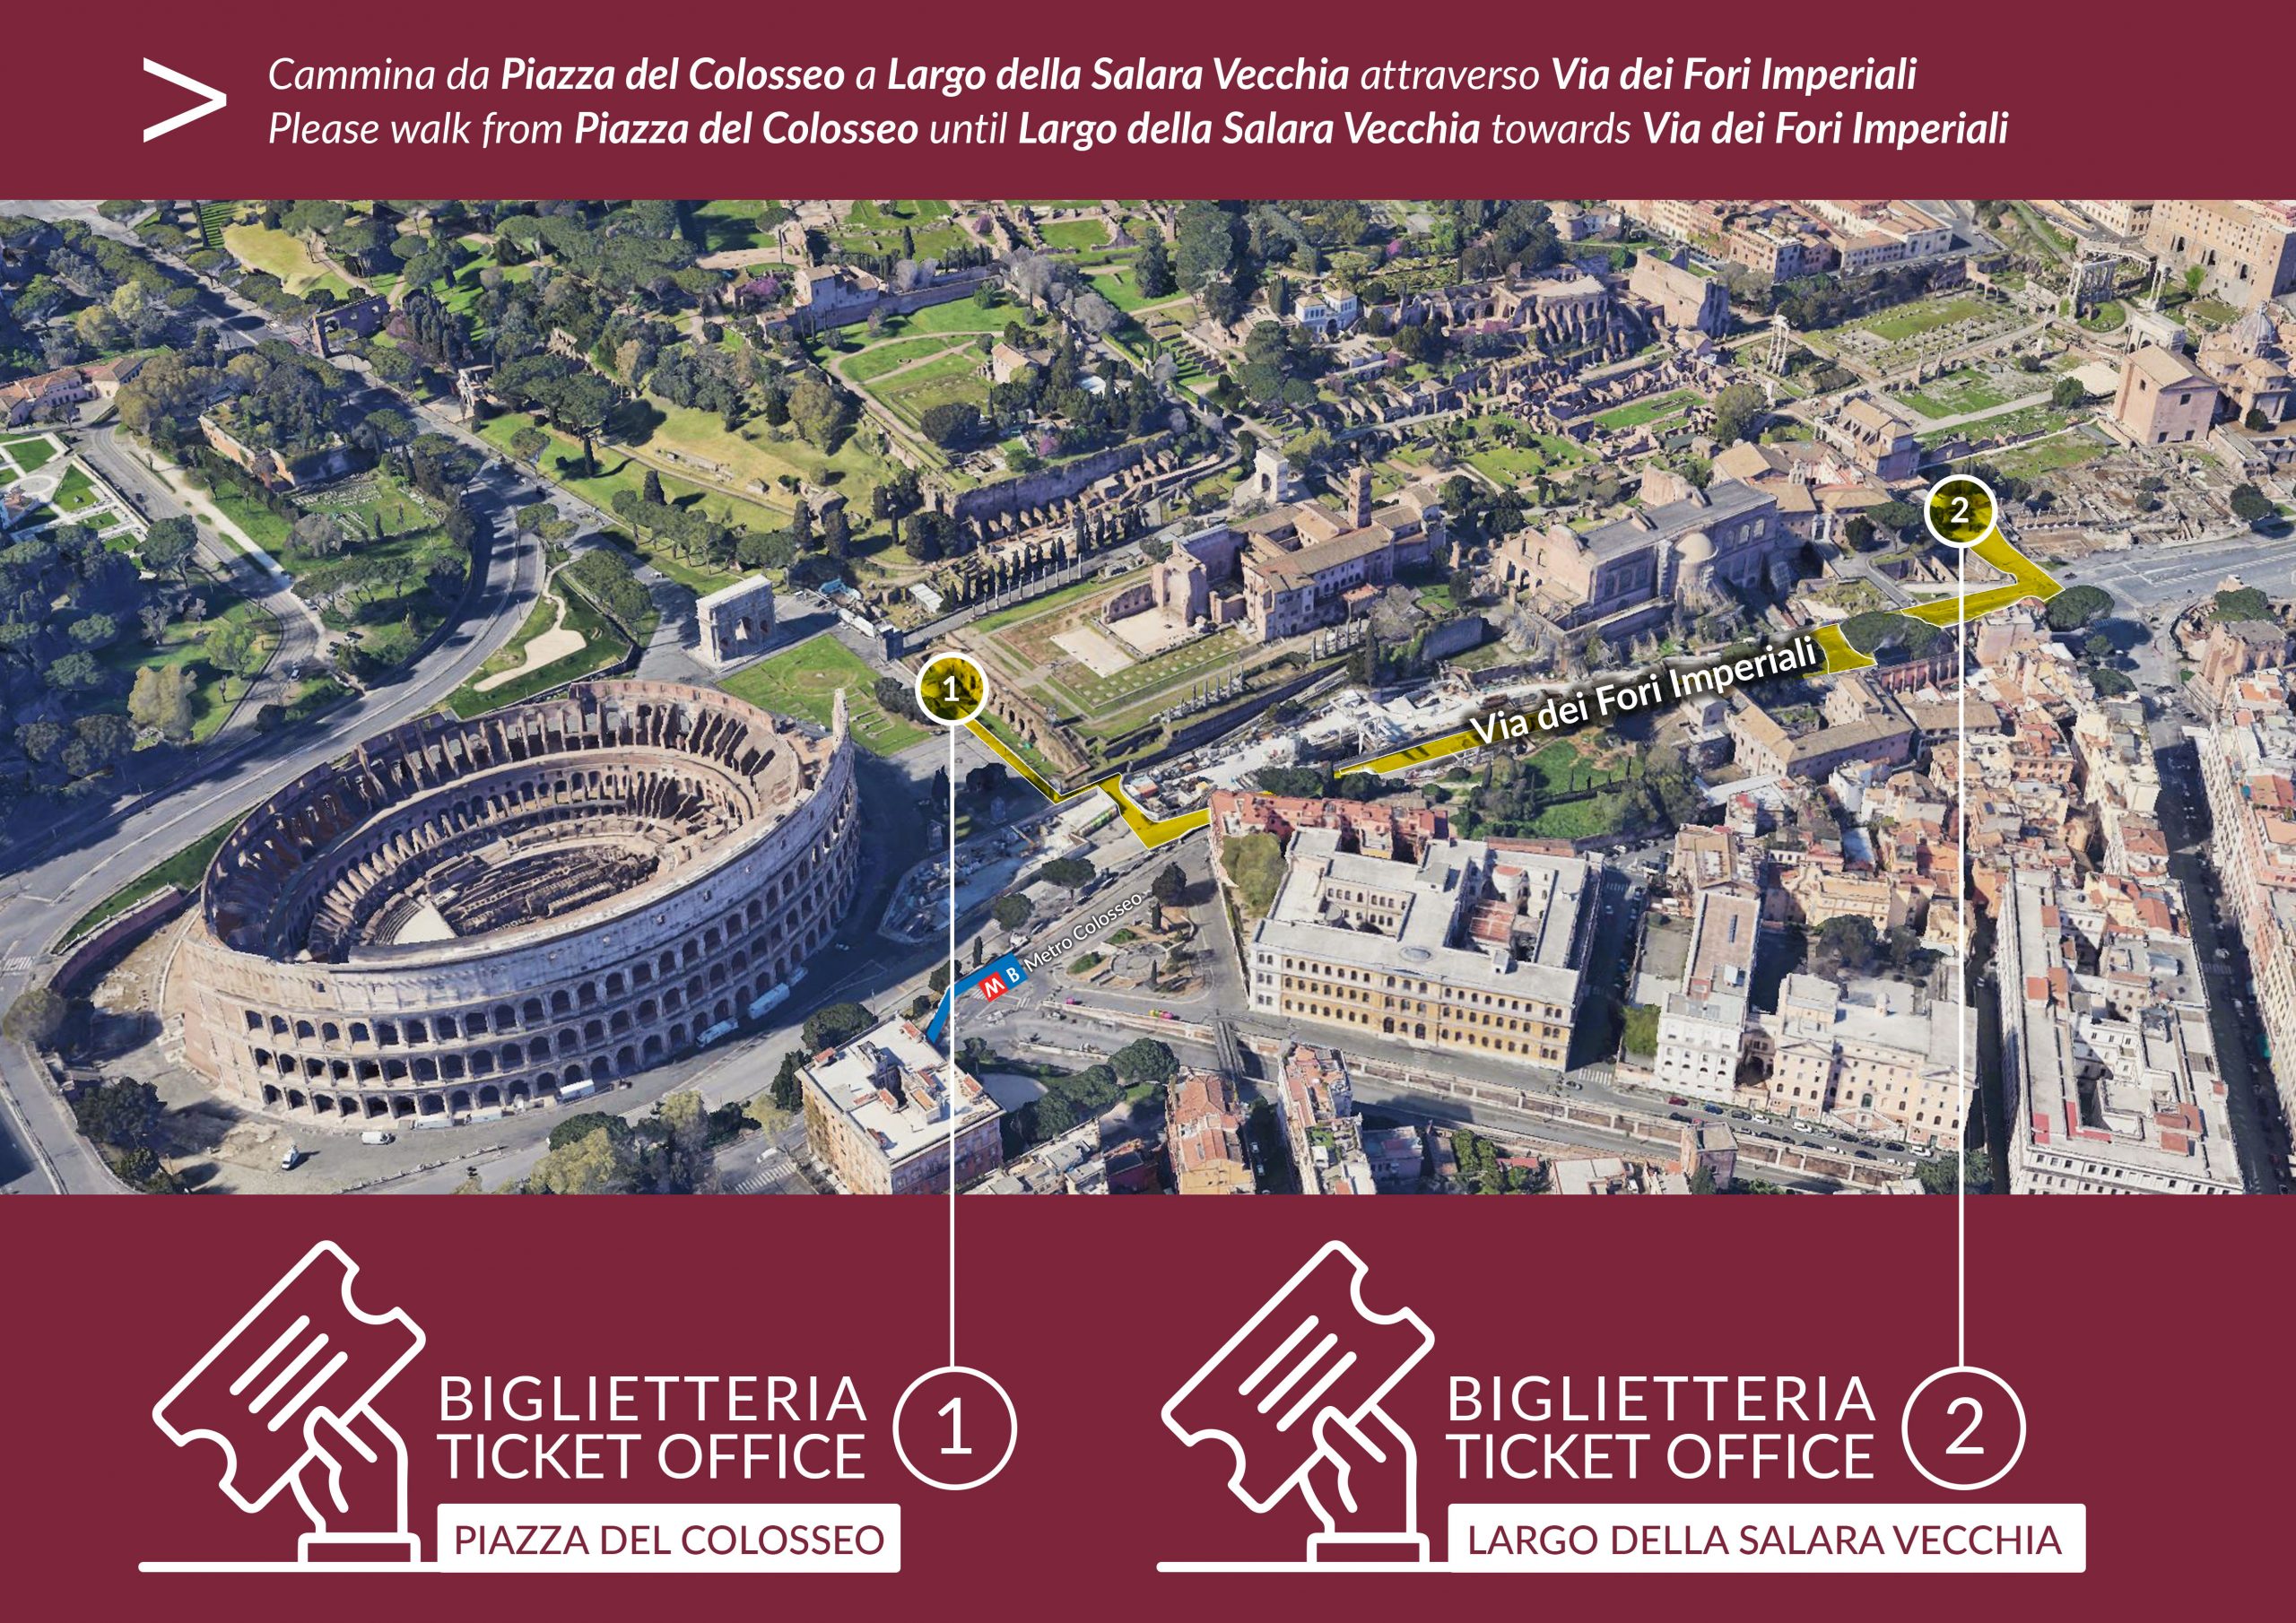 Biglietteria_Ticket-Office_Colosseum-scaled.jpg